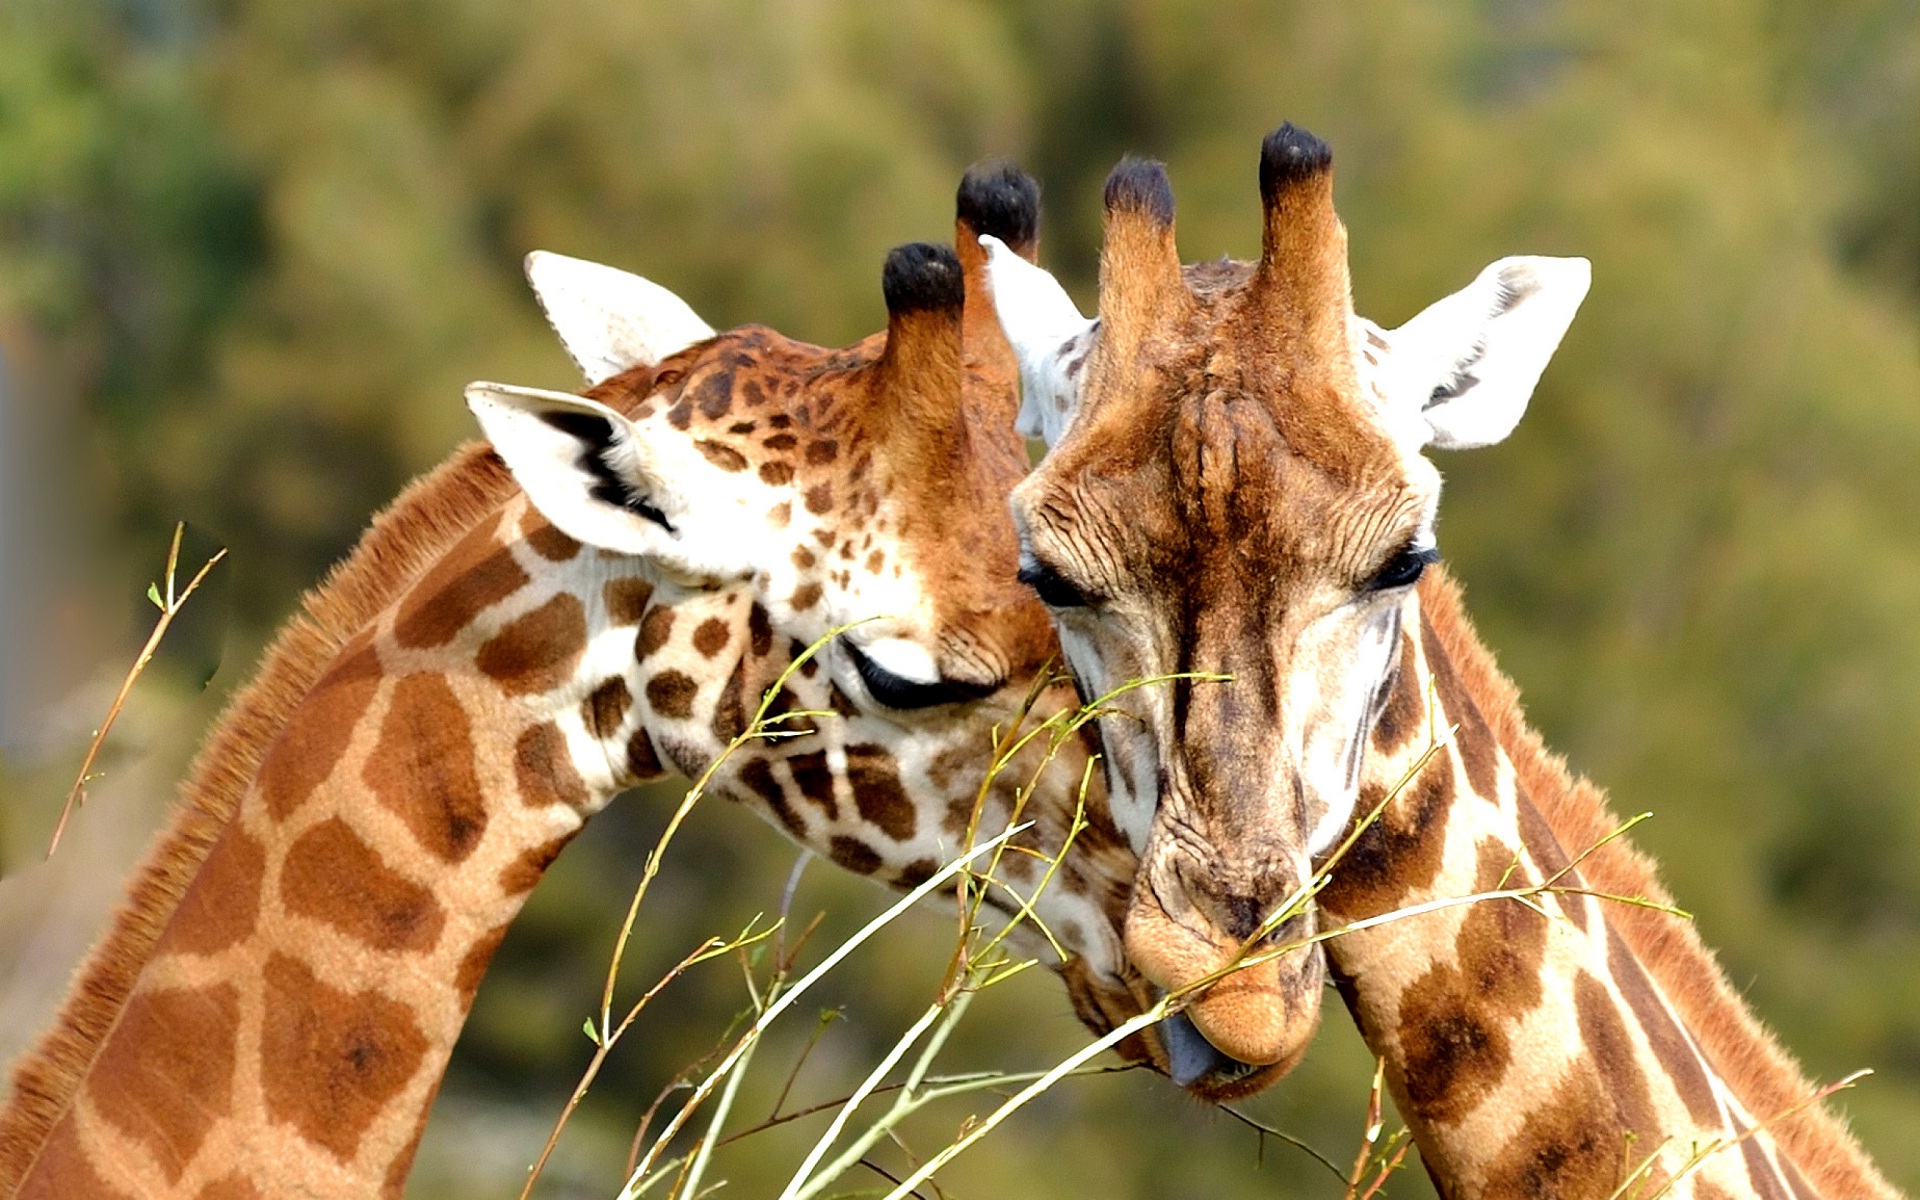 Giraffe couple love animal image | HD Wallpapers Rocks